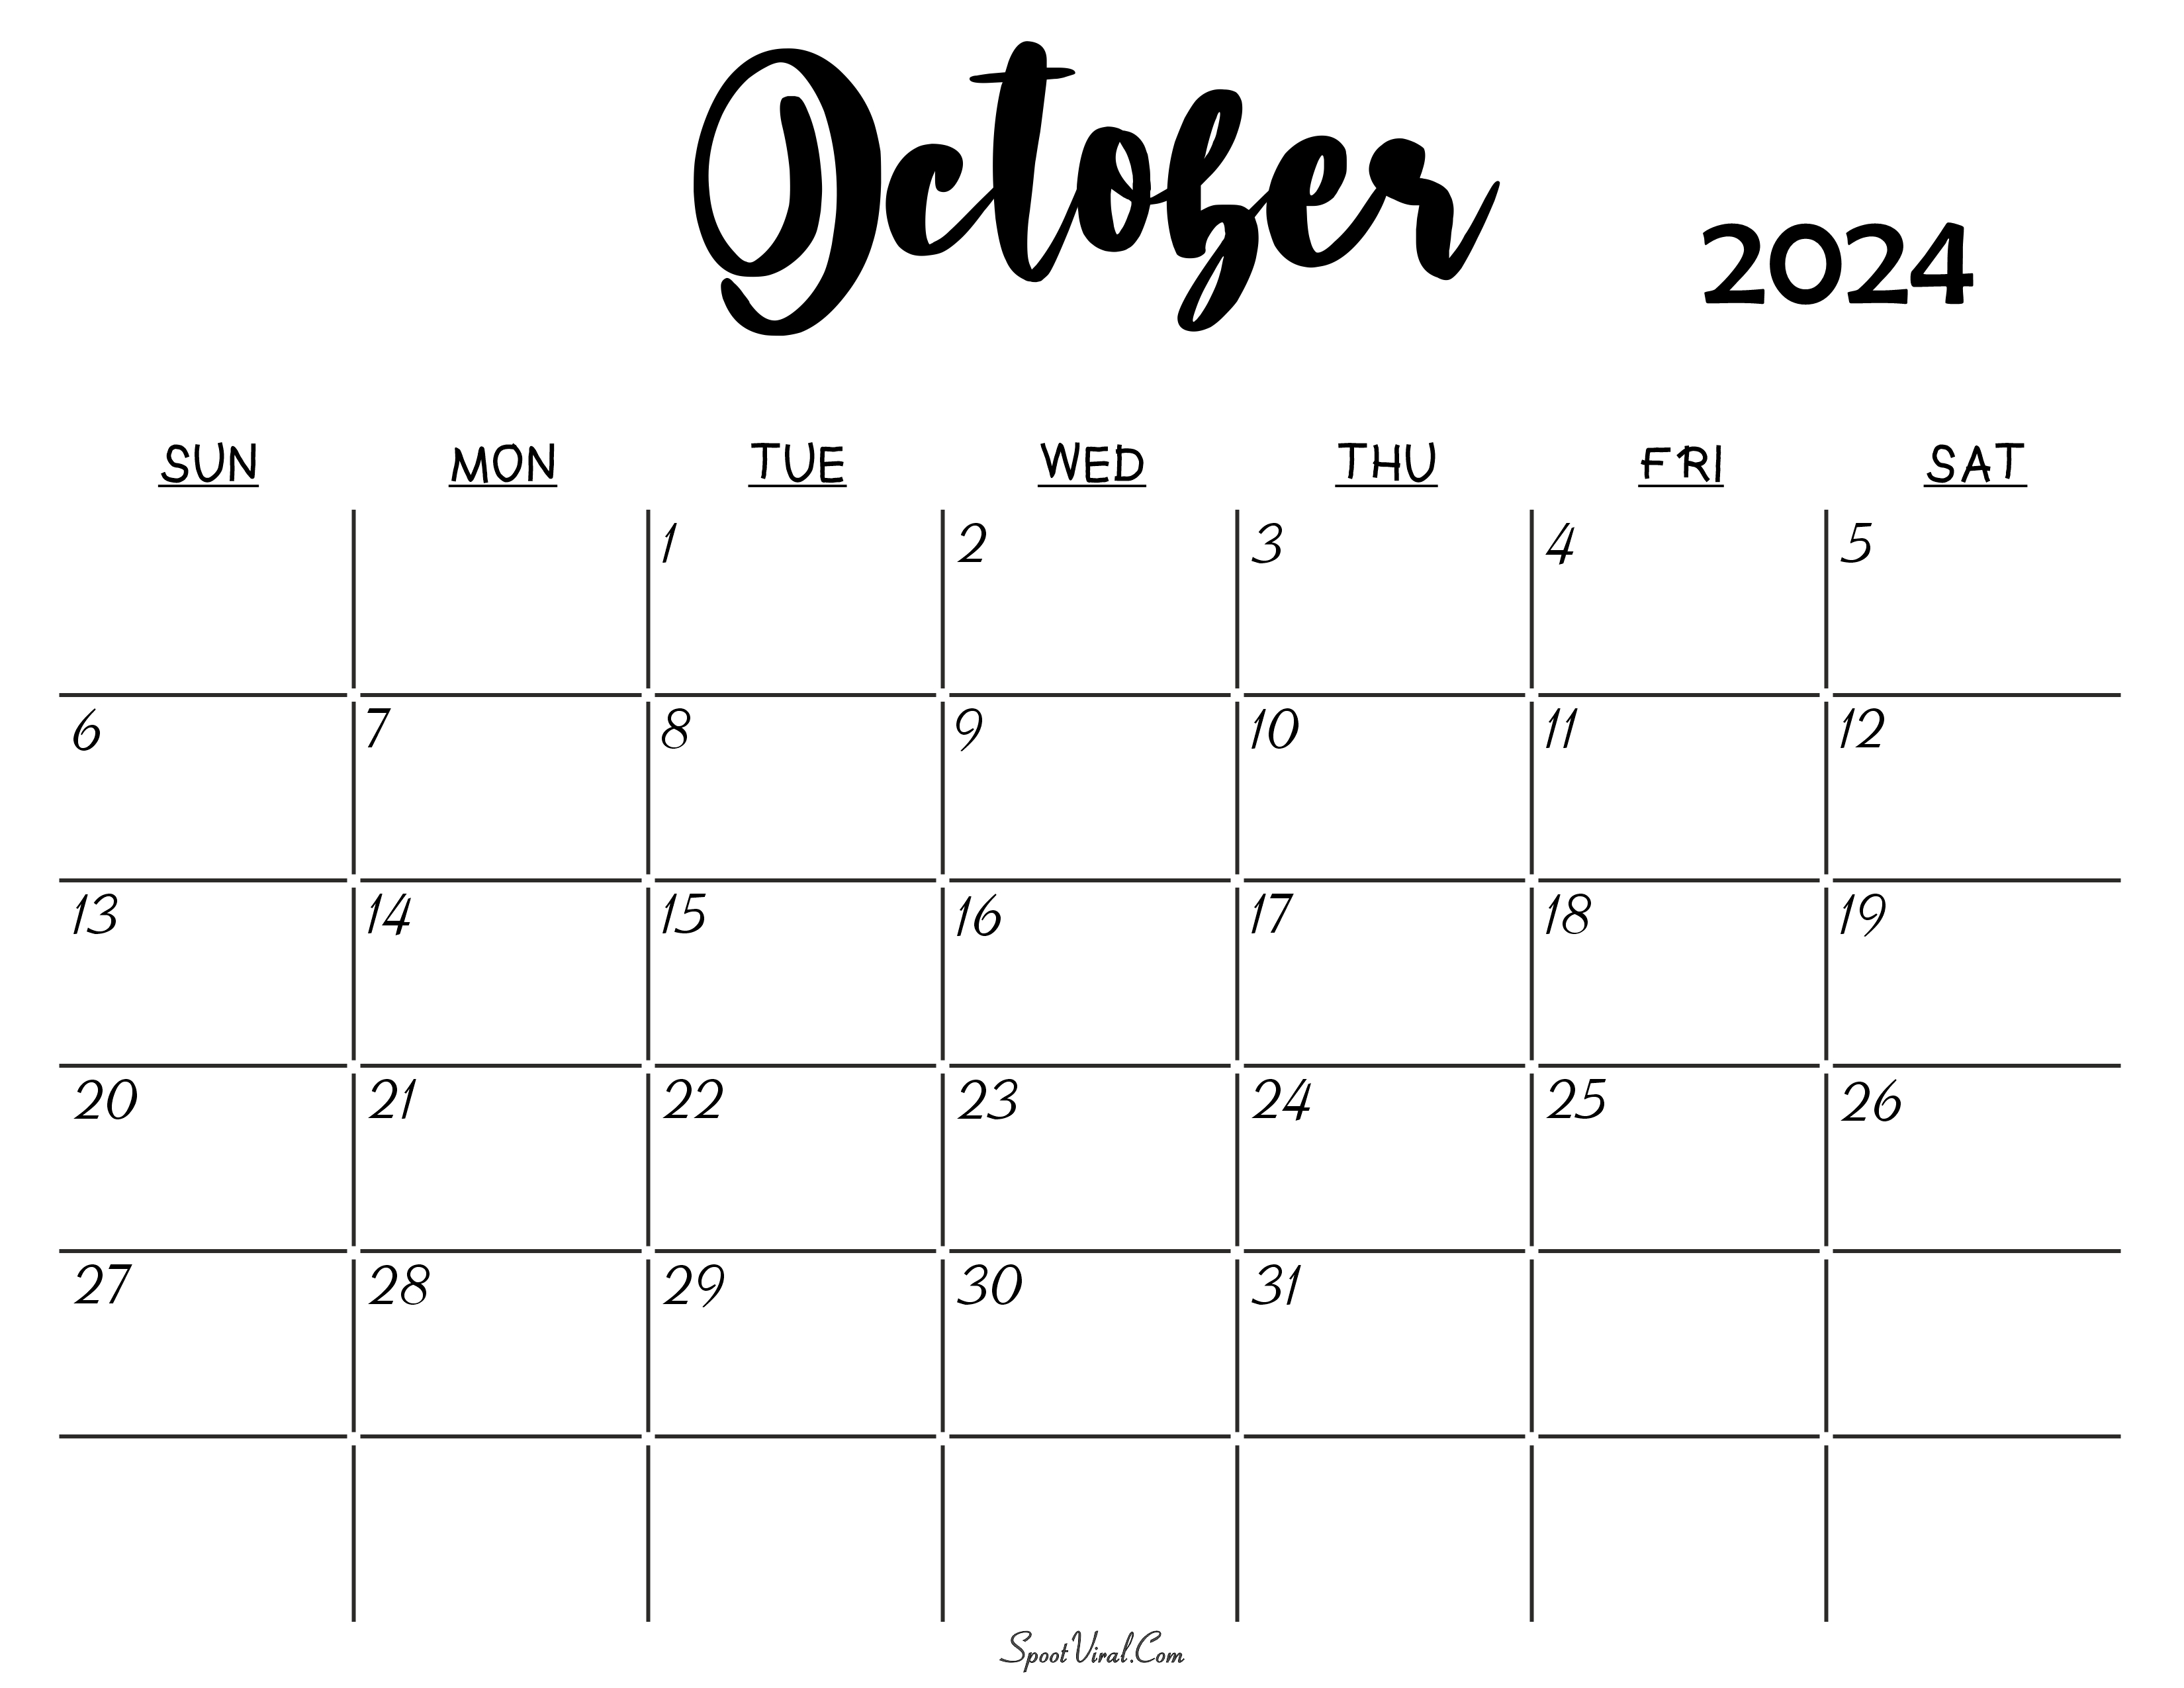 October 2024 Calendar